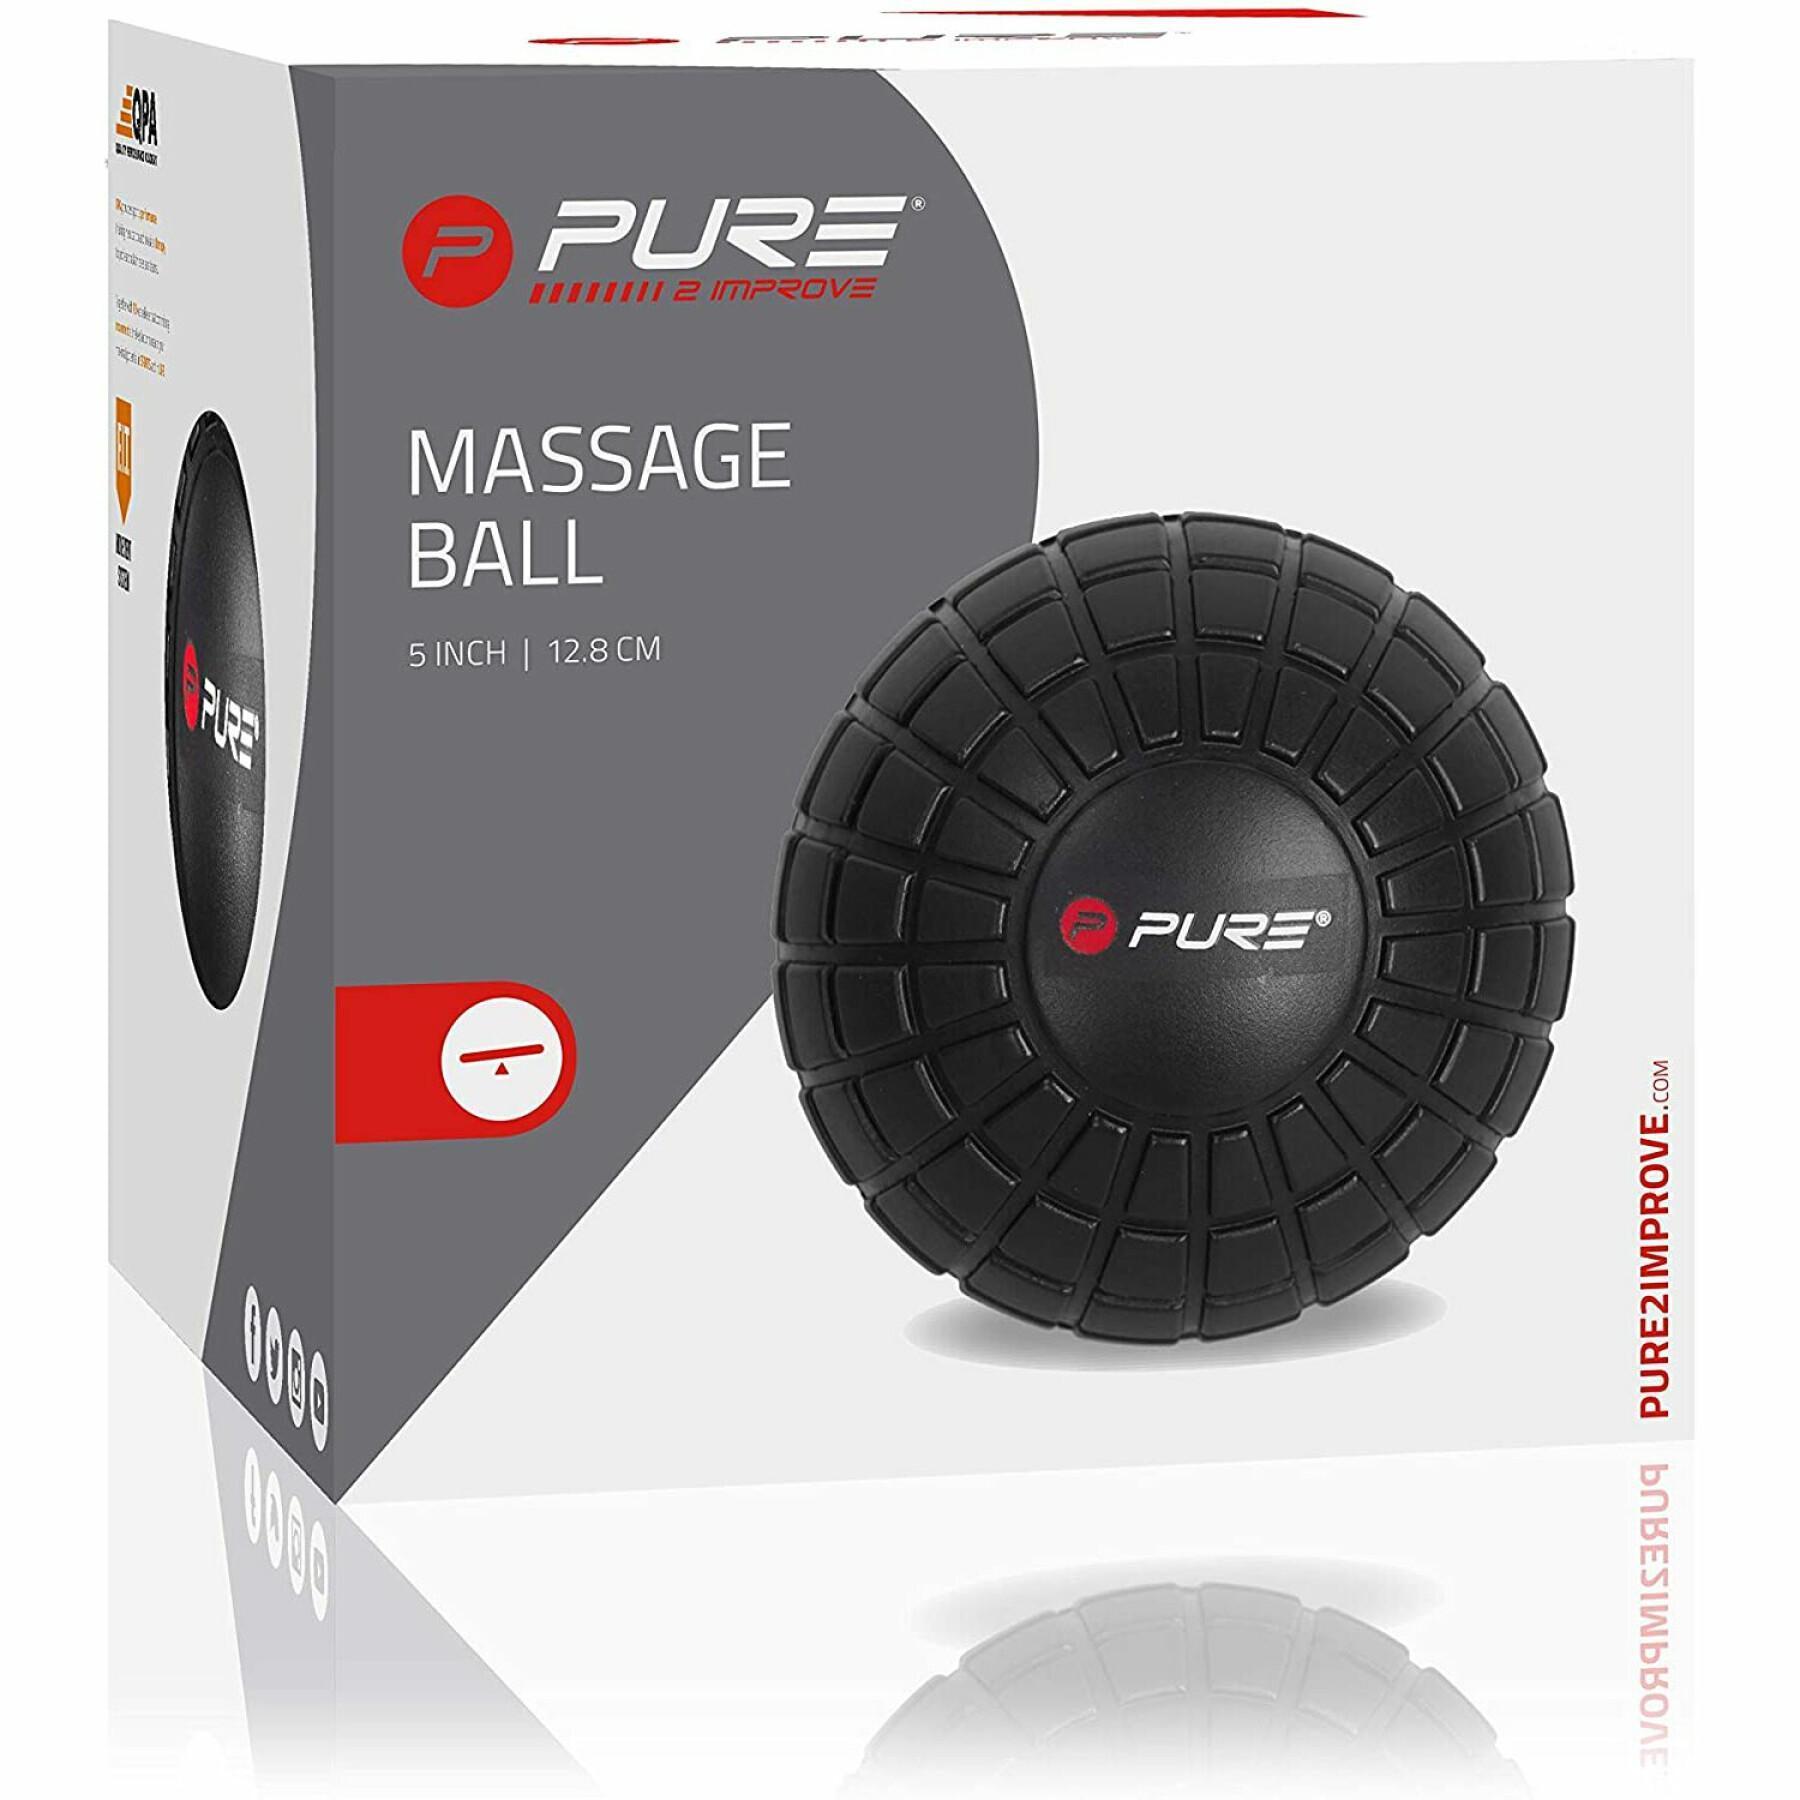 Balle de massage Pure2Improve recovery